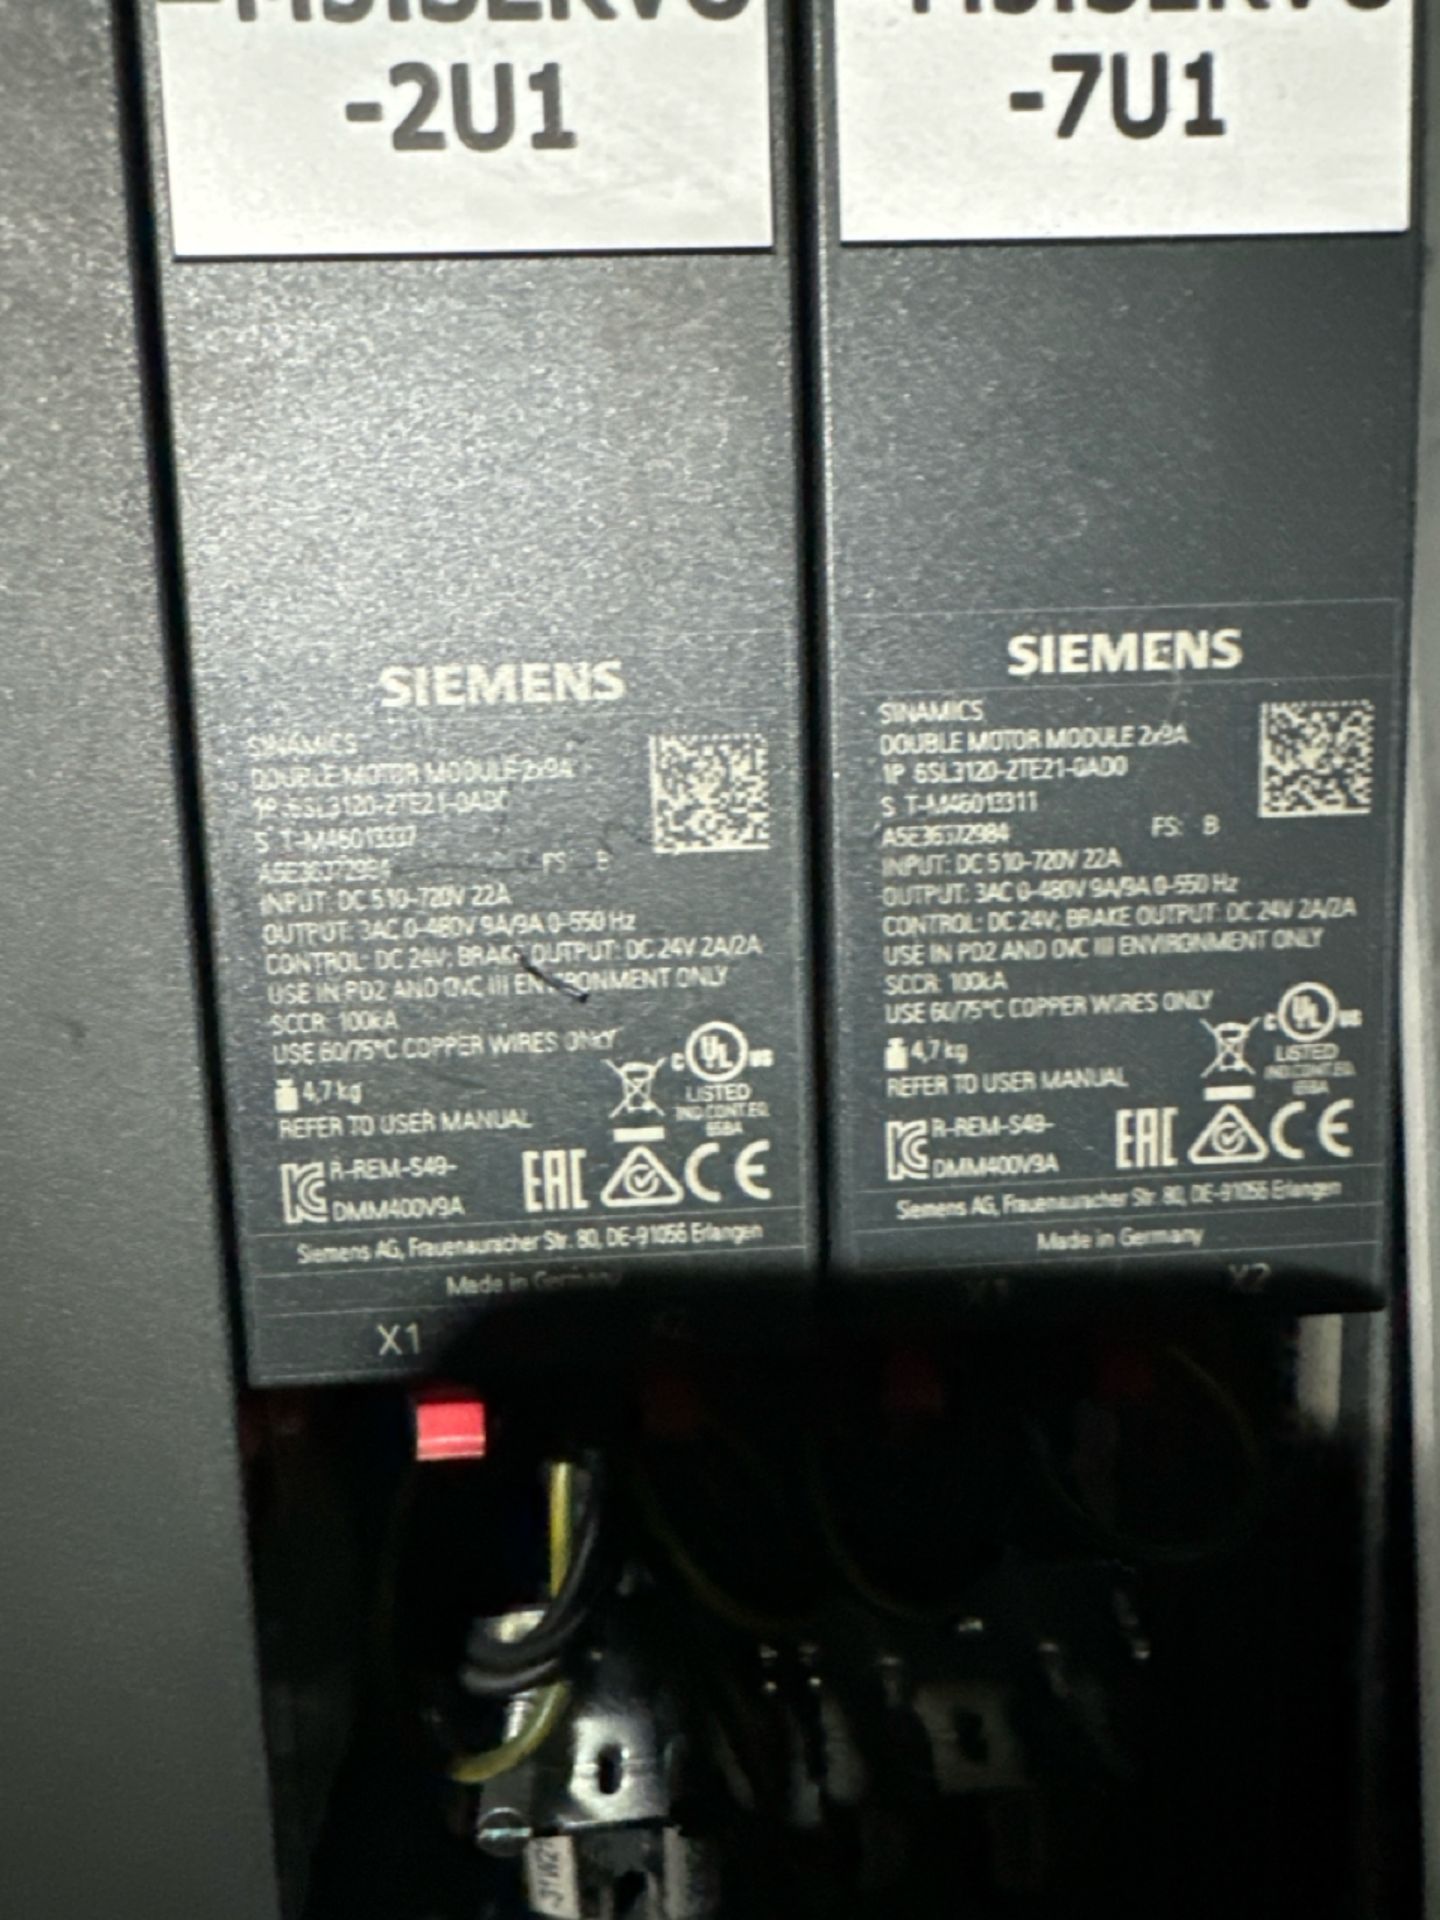 Siemens Sinamics Double Motor Module 2x9A x2 - Image 2 of 2